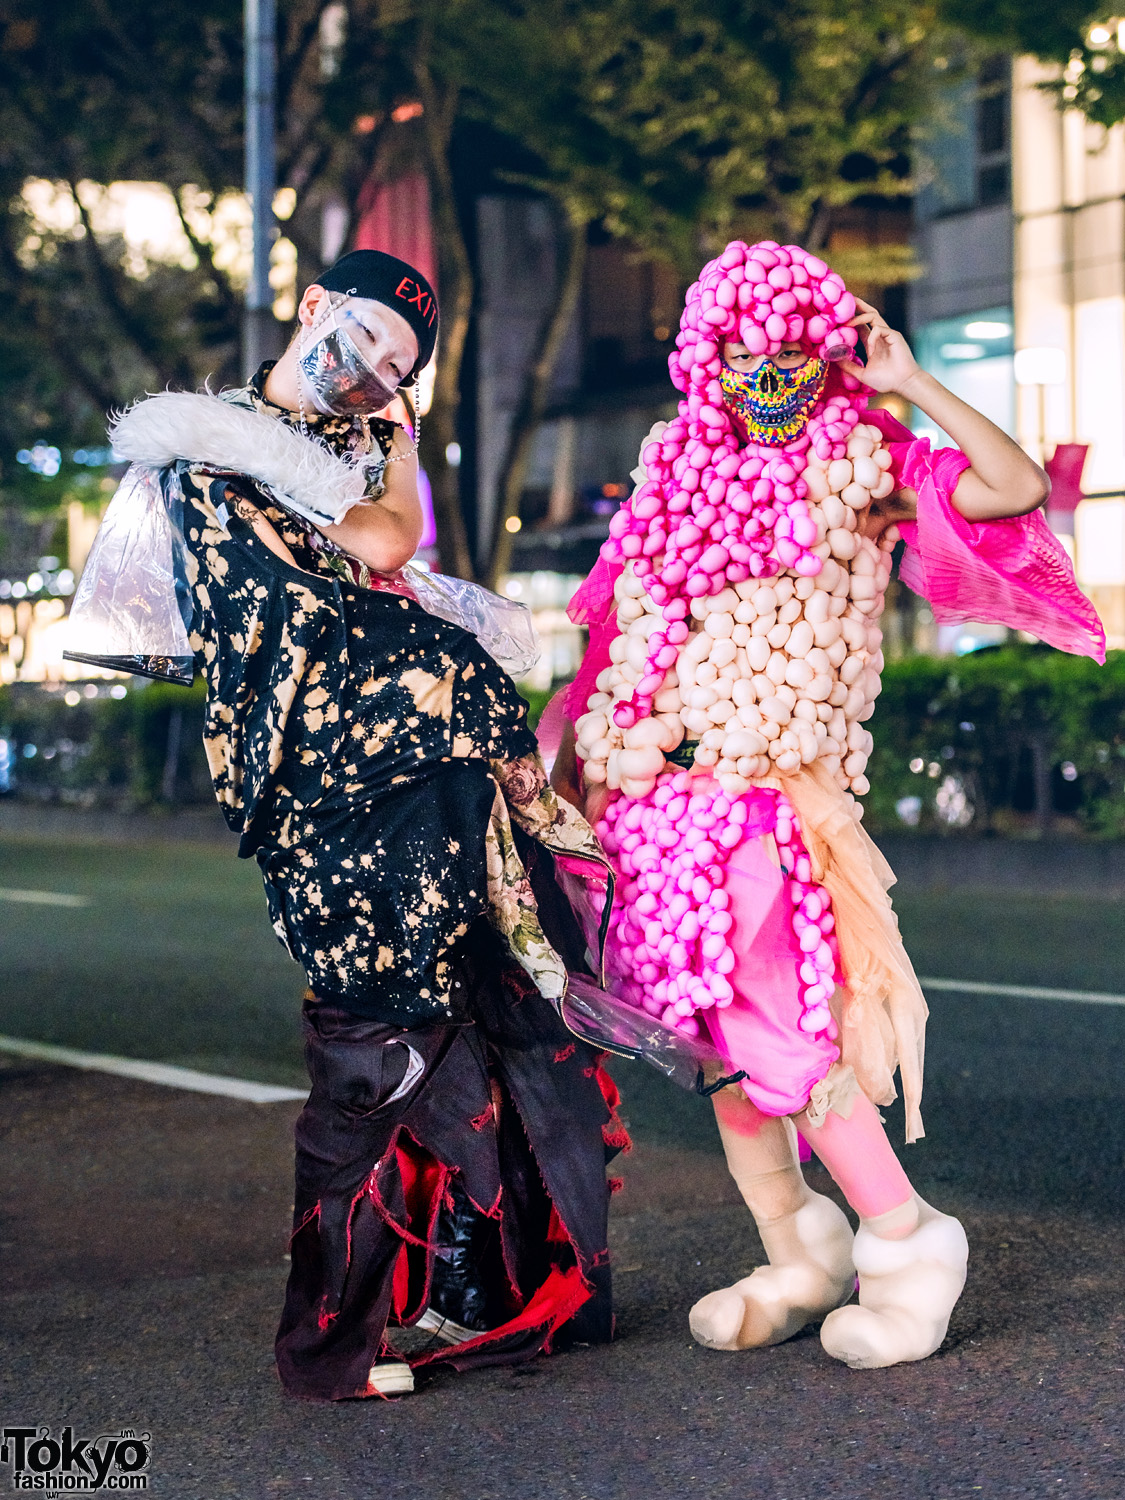 Avant-Garde Tokyo Streetwear Styles w/ Handmade Fashion, TKM6006@, Rowan, Venom, Rick Owens & Colorful Skull Face Mask